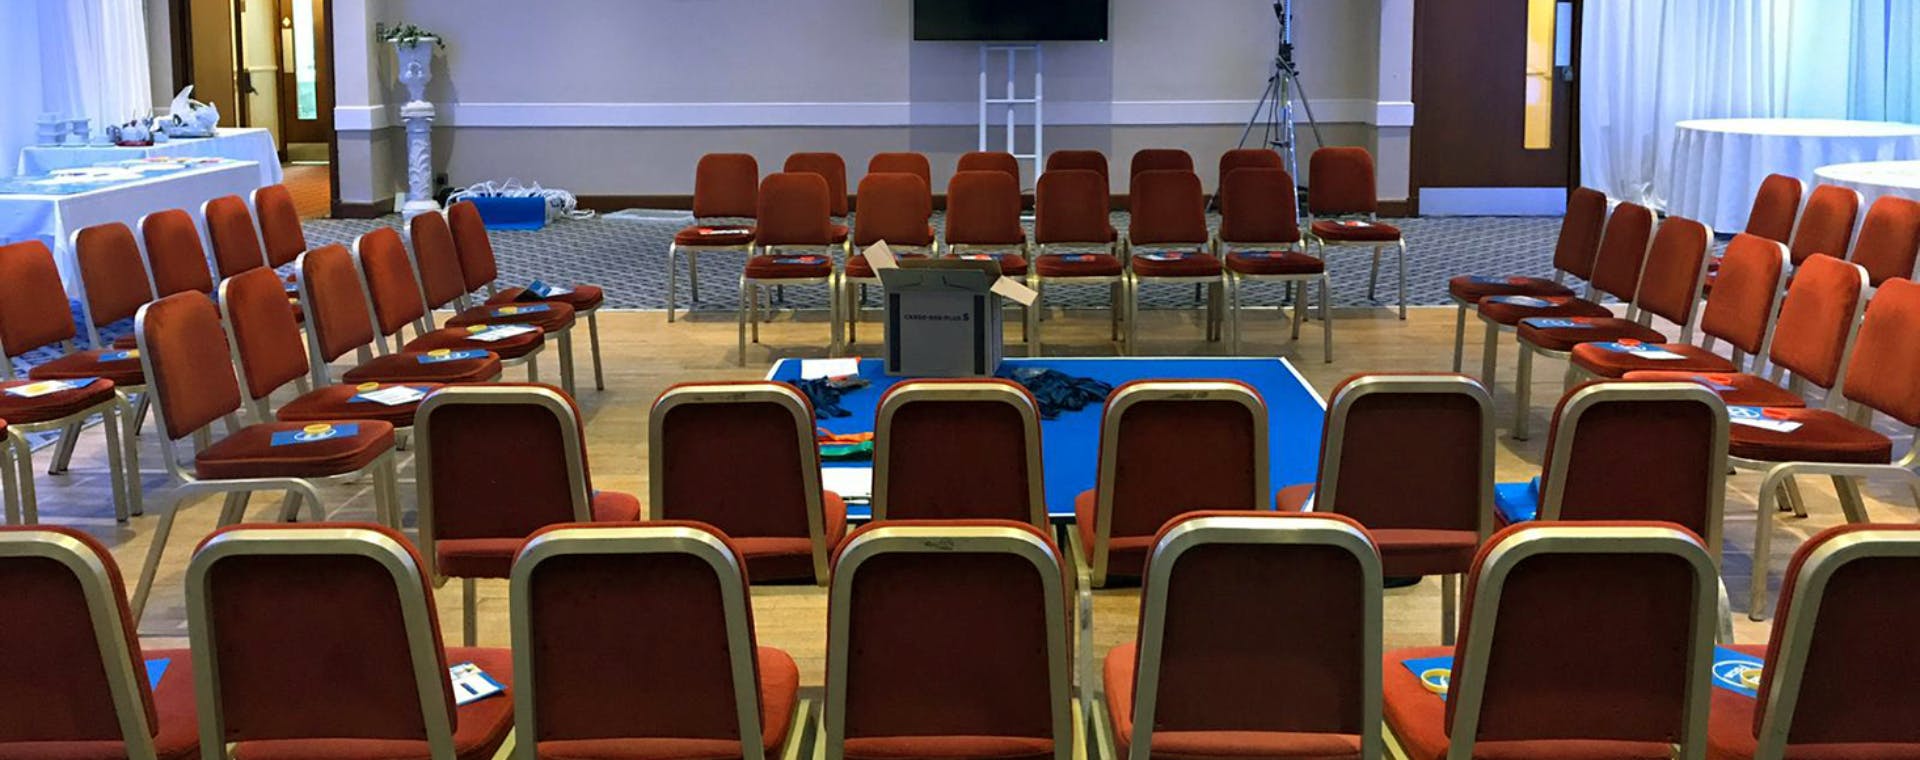 Caladh Inn Garry Room Meeting Setup, red chairs set around centre training area.